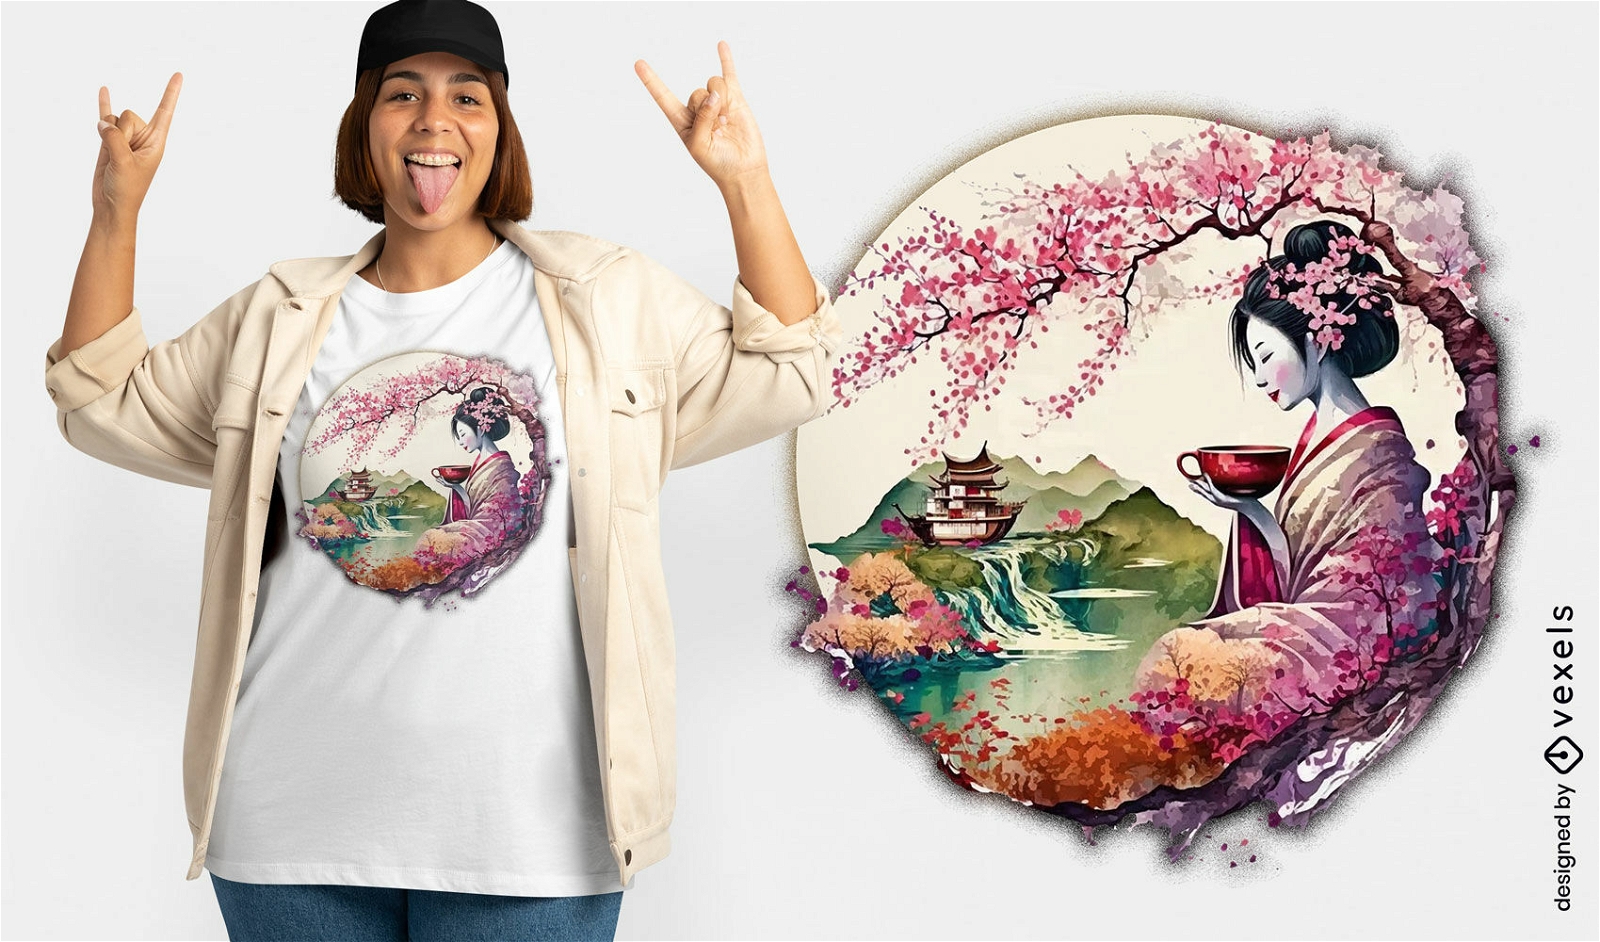 Dise?o de camiseta de geisha japonesa y paisaje.